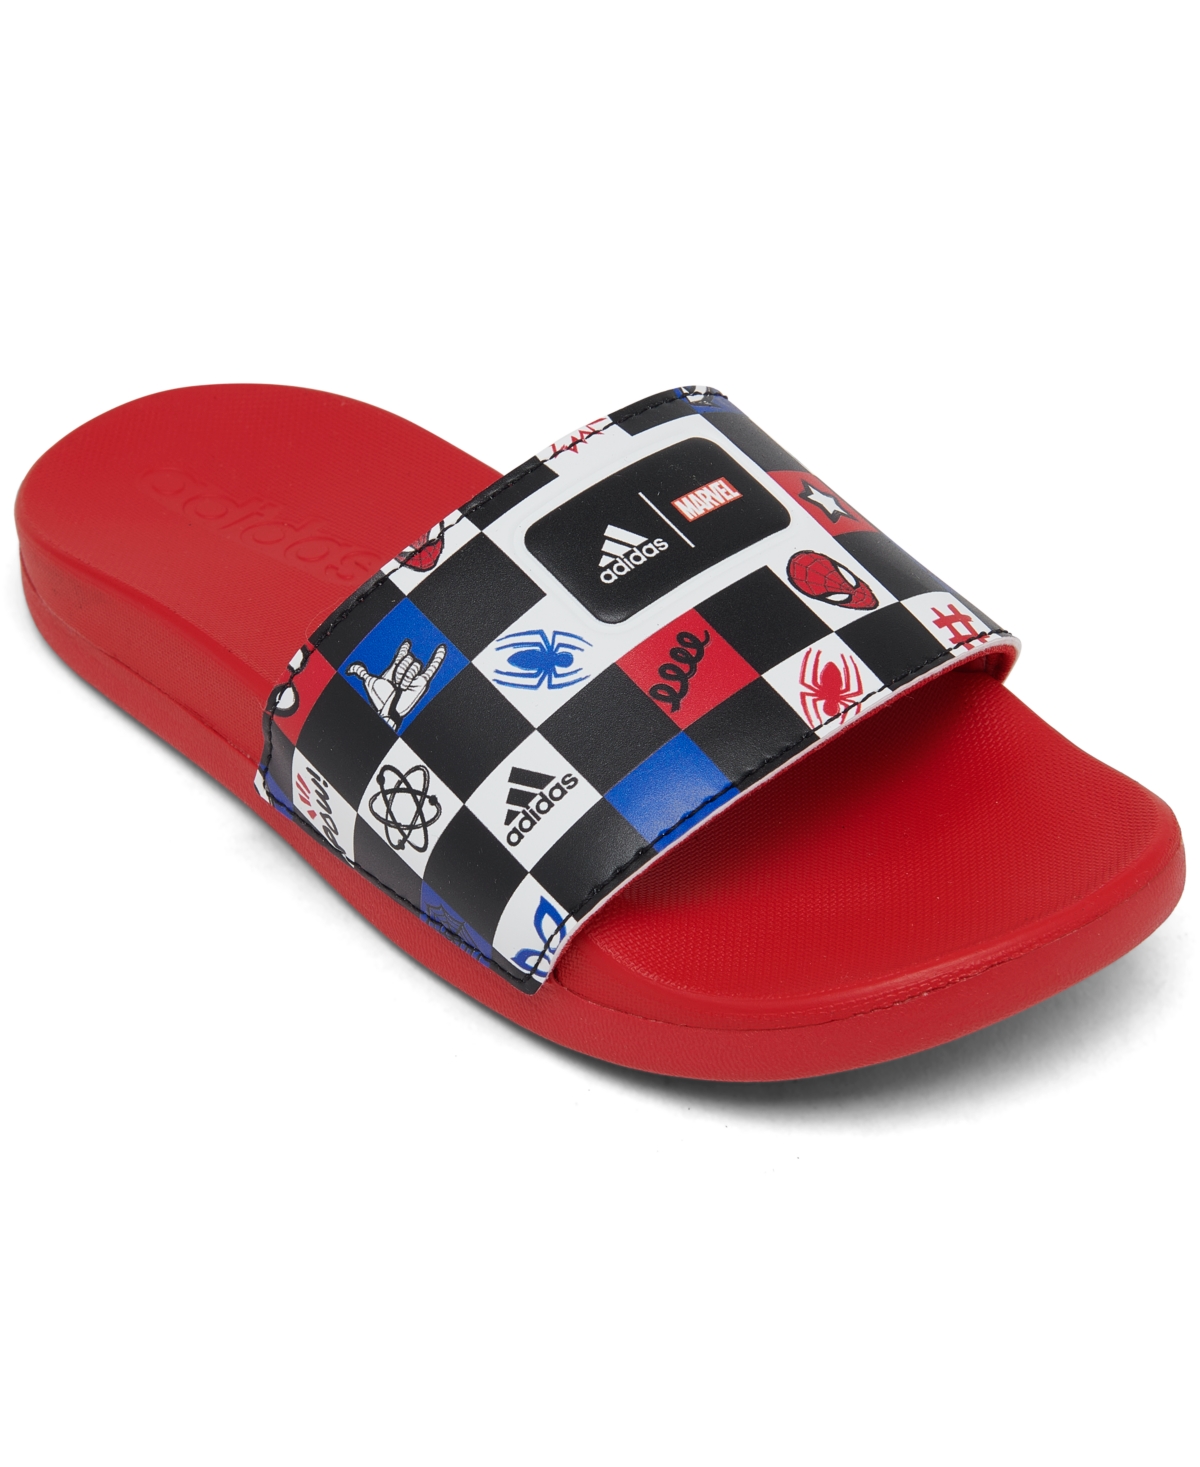 Adidas x Disney Adilette Comfort Spider-Man Slides - Kids - Core Black / Cloud White / Better Scarlet Red - 5